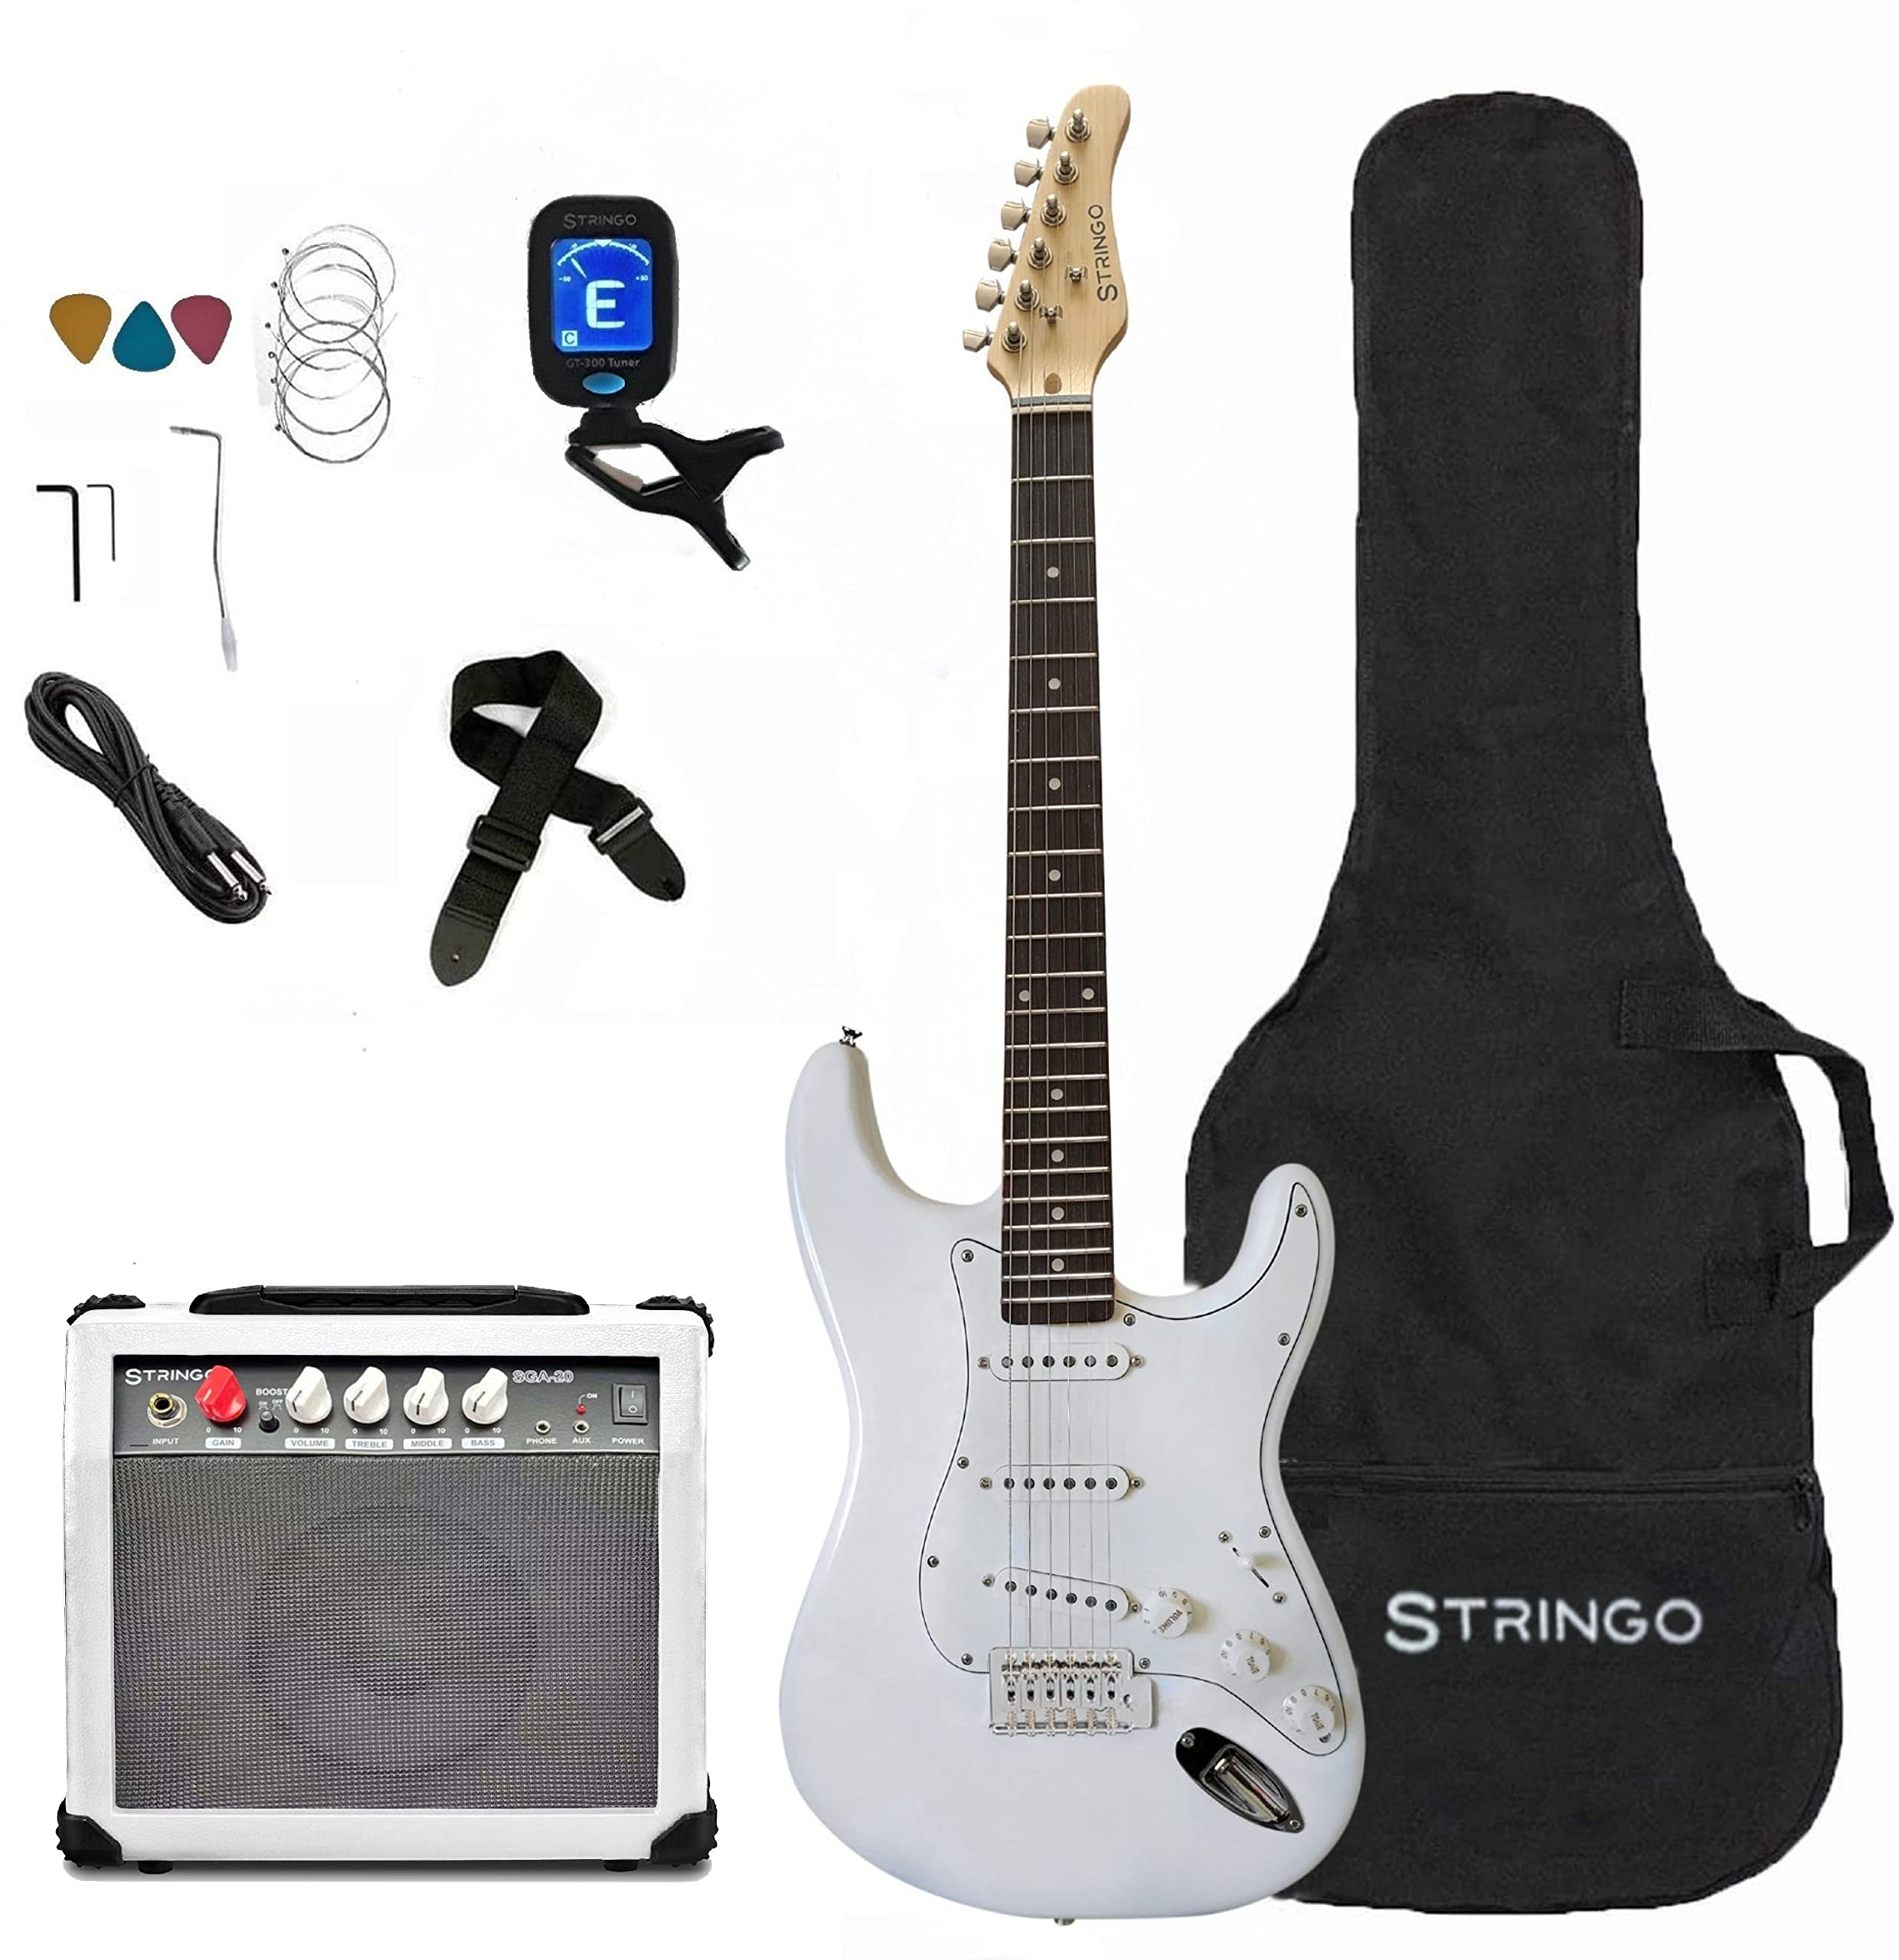 Stringo White Electric Guitar Beginner Kit Full Size 39 Inch Set Includes Tremolo Guitar, 20W Amplifier 3 Picks, Shoulder Strap, Tuner,